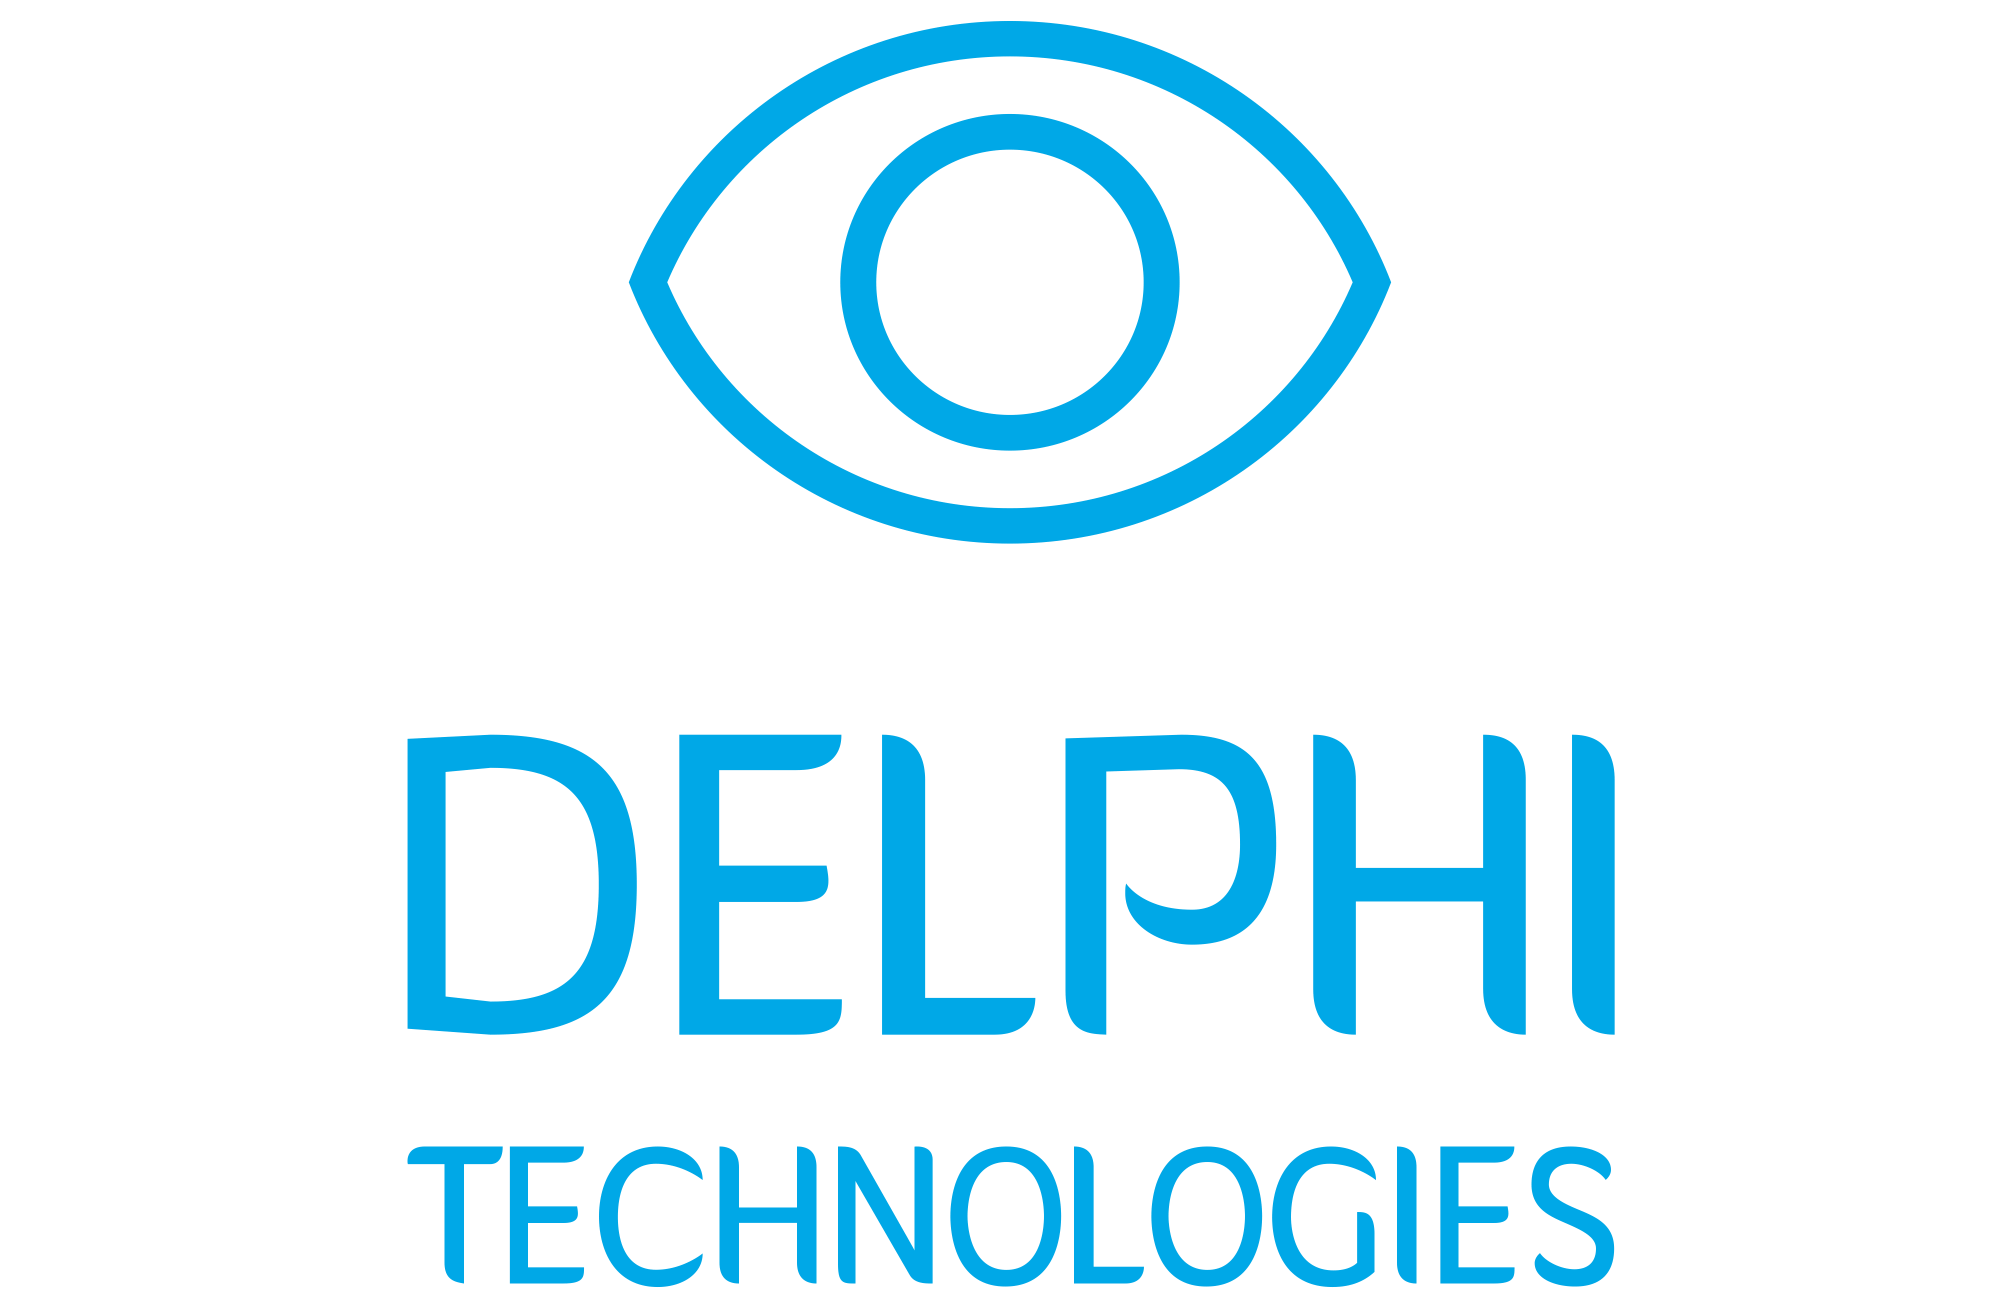 Delphi Technologies Logo - Delphi Technologies Art of Data Analysis